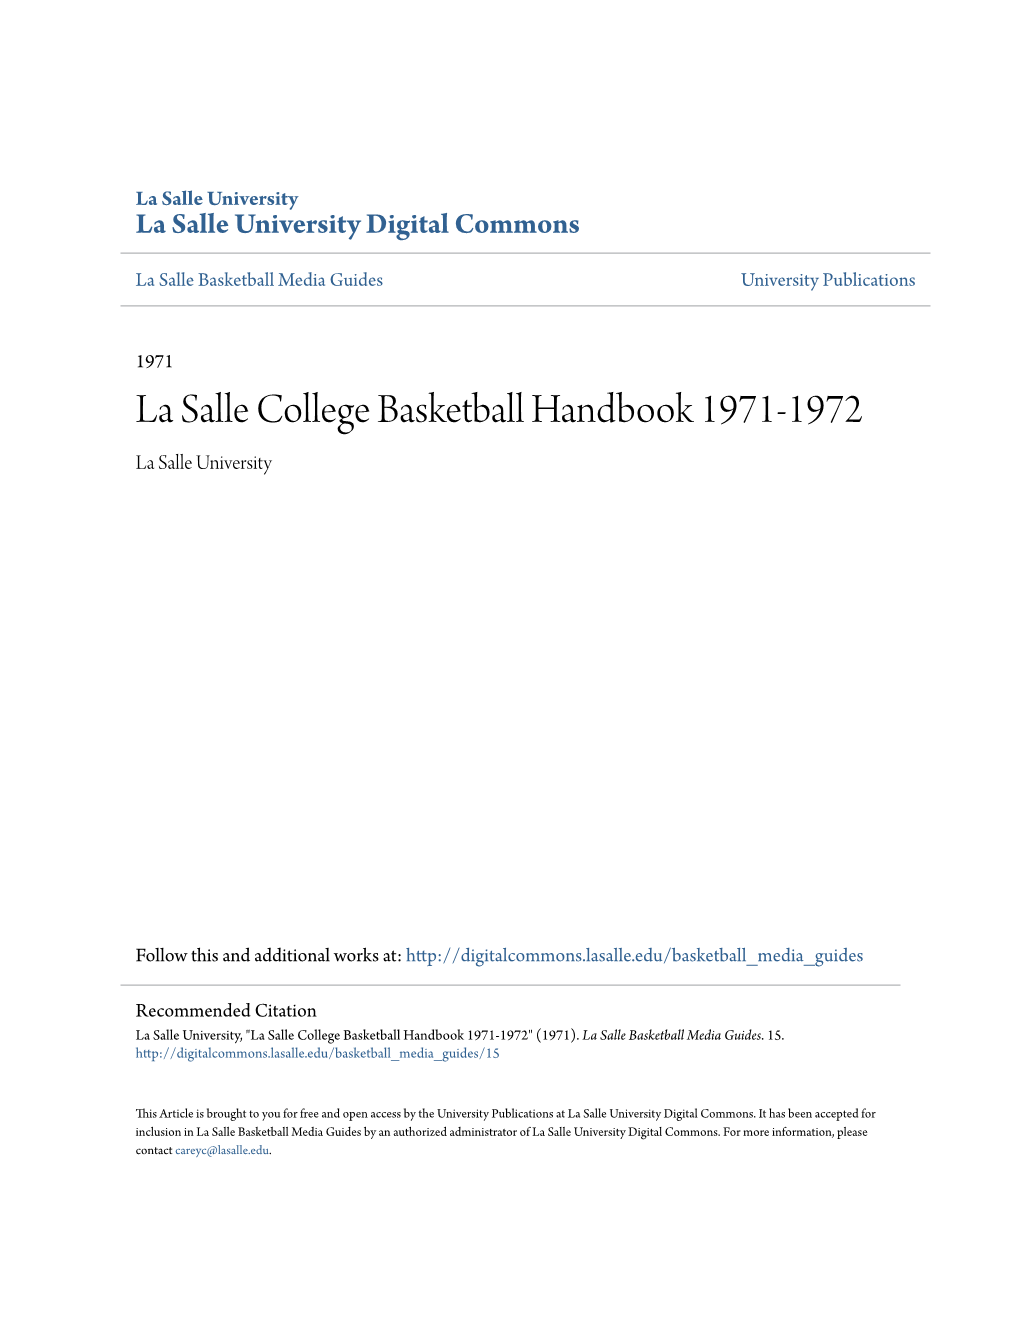 La Salle College Basketball Handbook 1971-1972 La Salle University